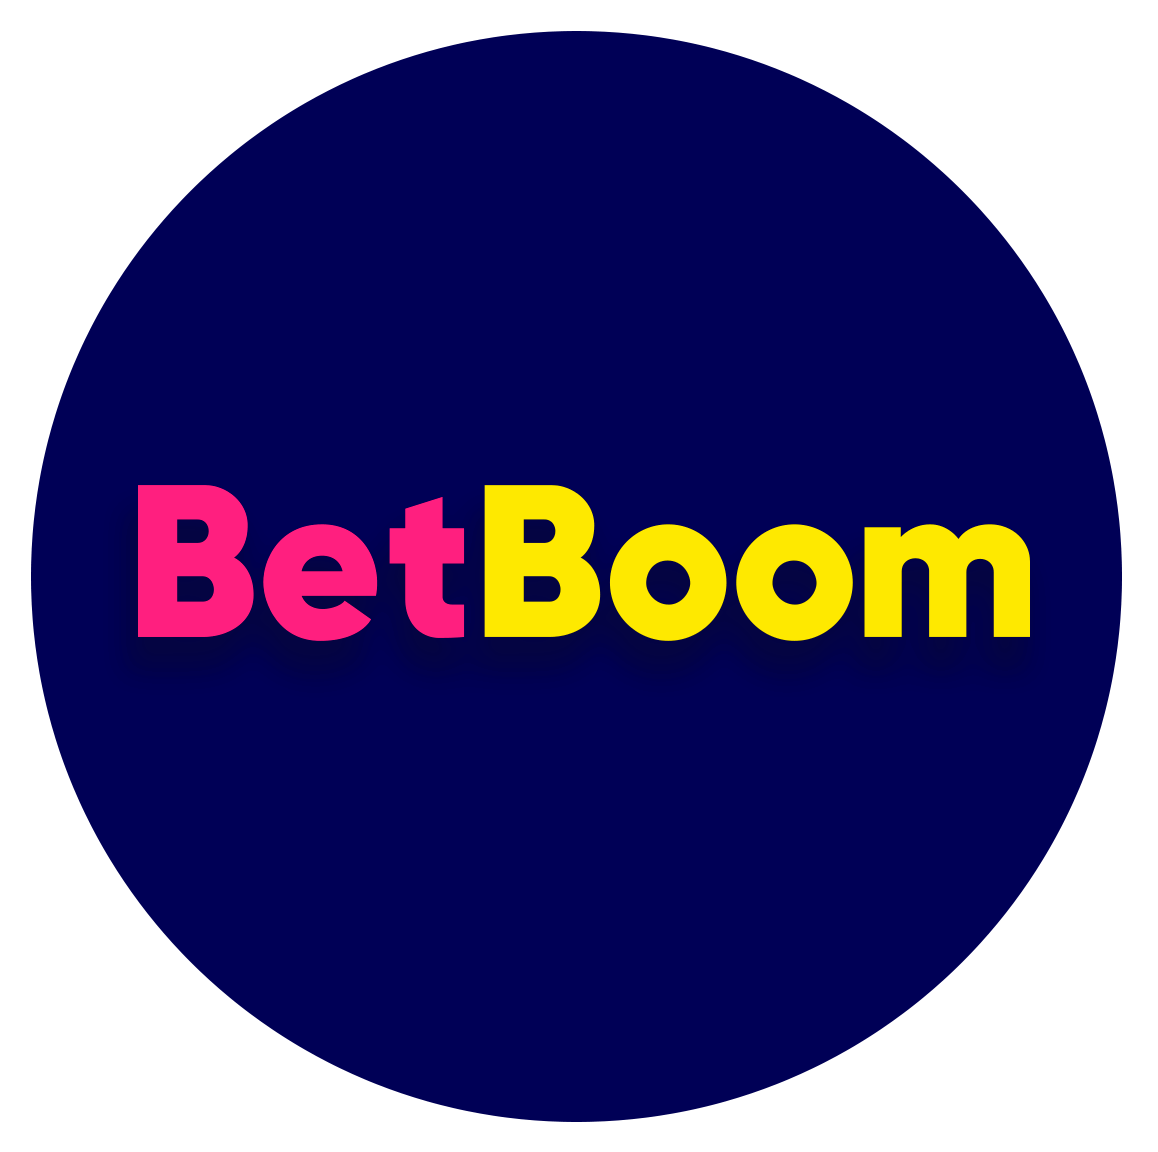 BetBoom